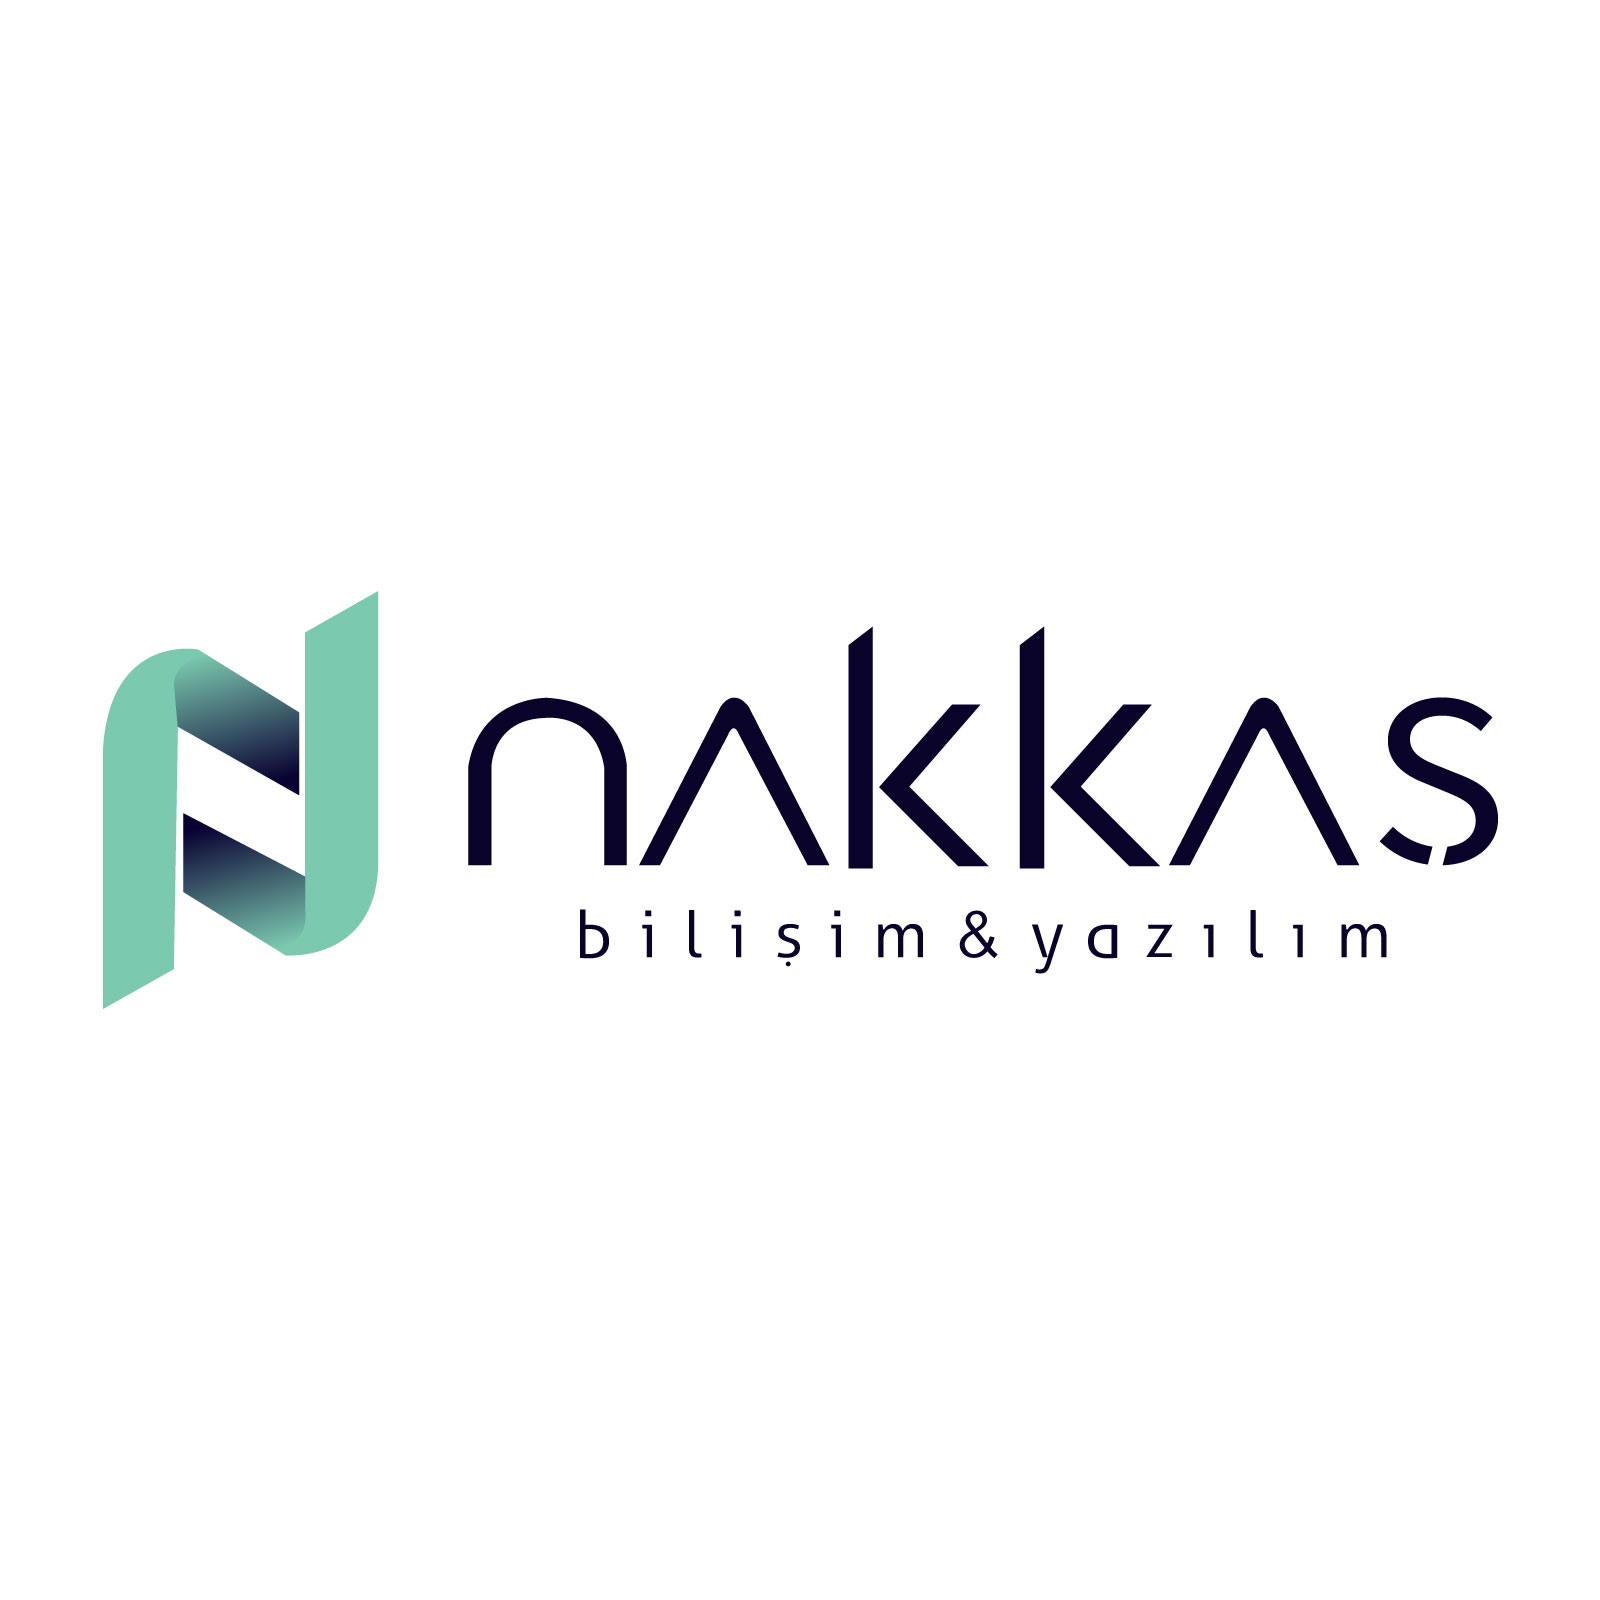 nakkas logo